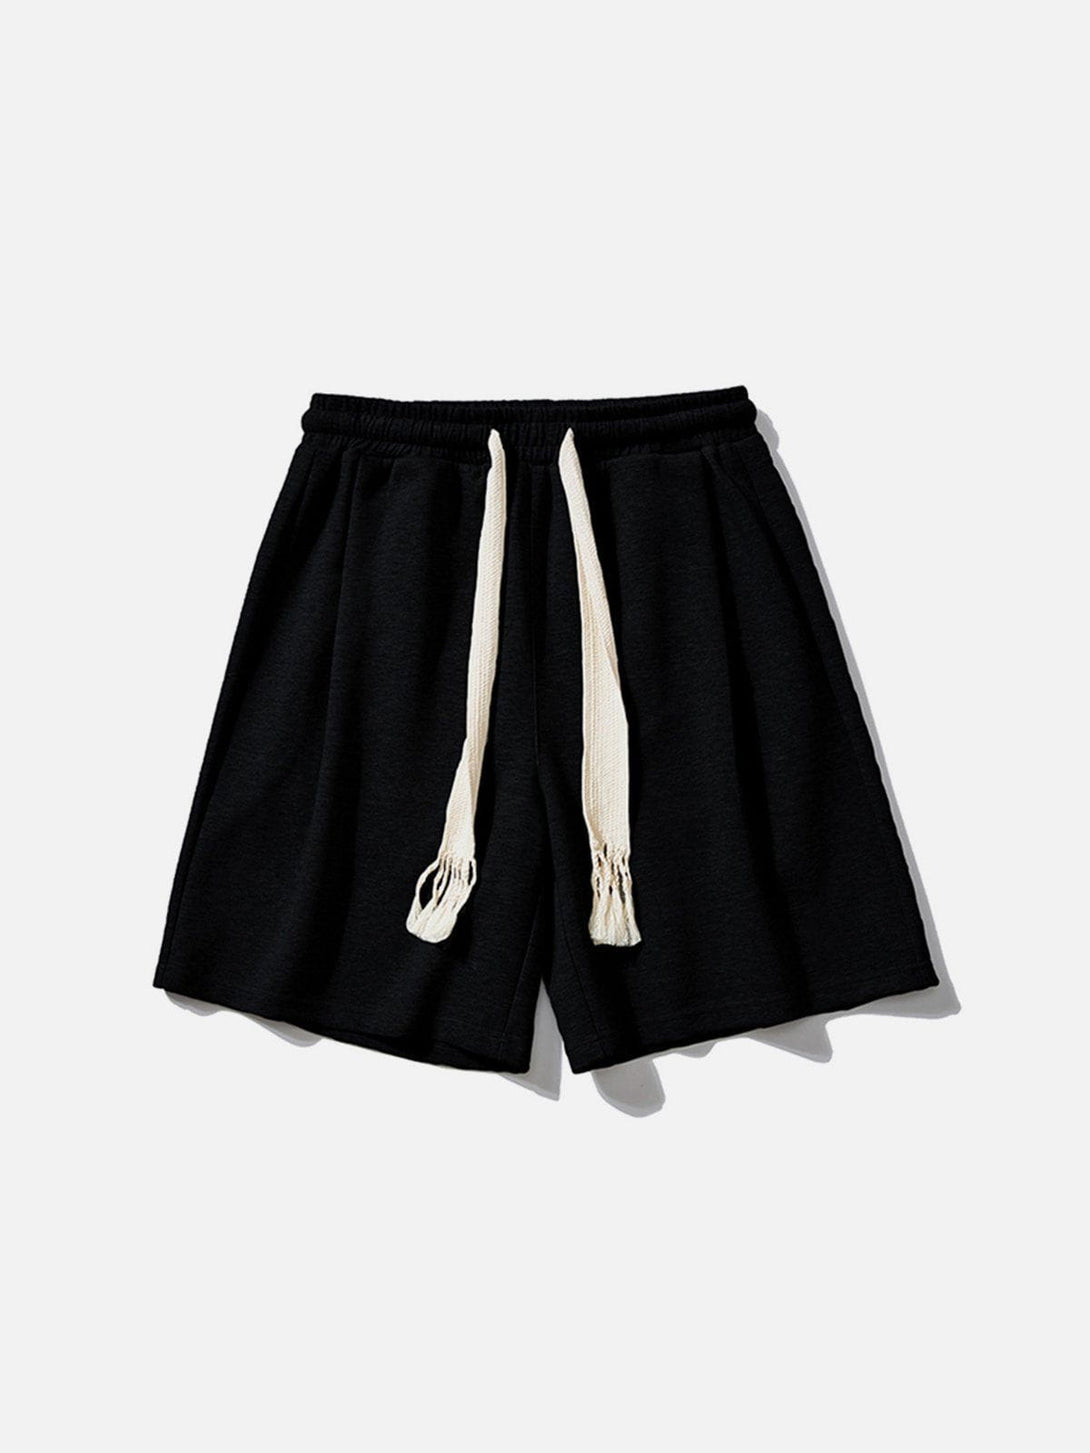 Majesda® - Solid Drawstring Shorts outfit ideas streetwear fashion